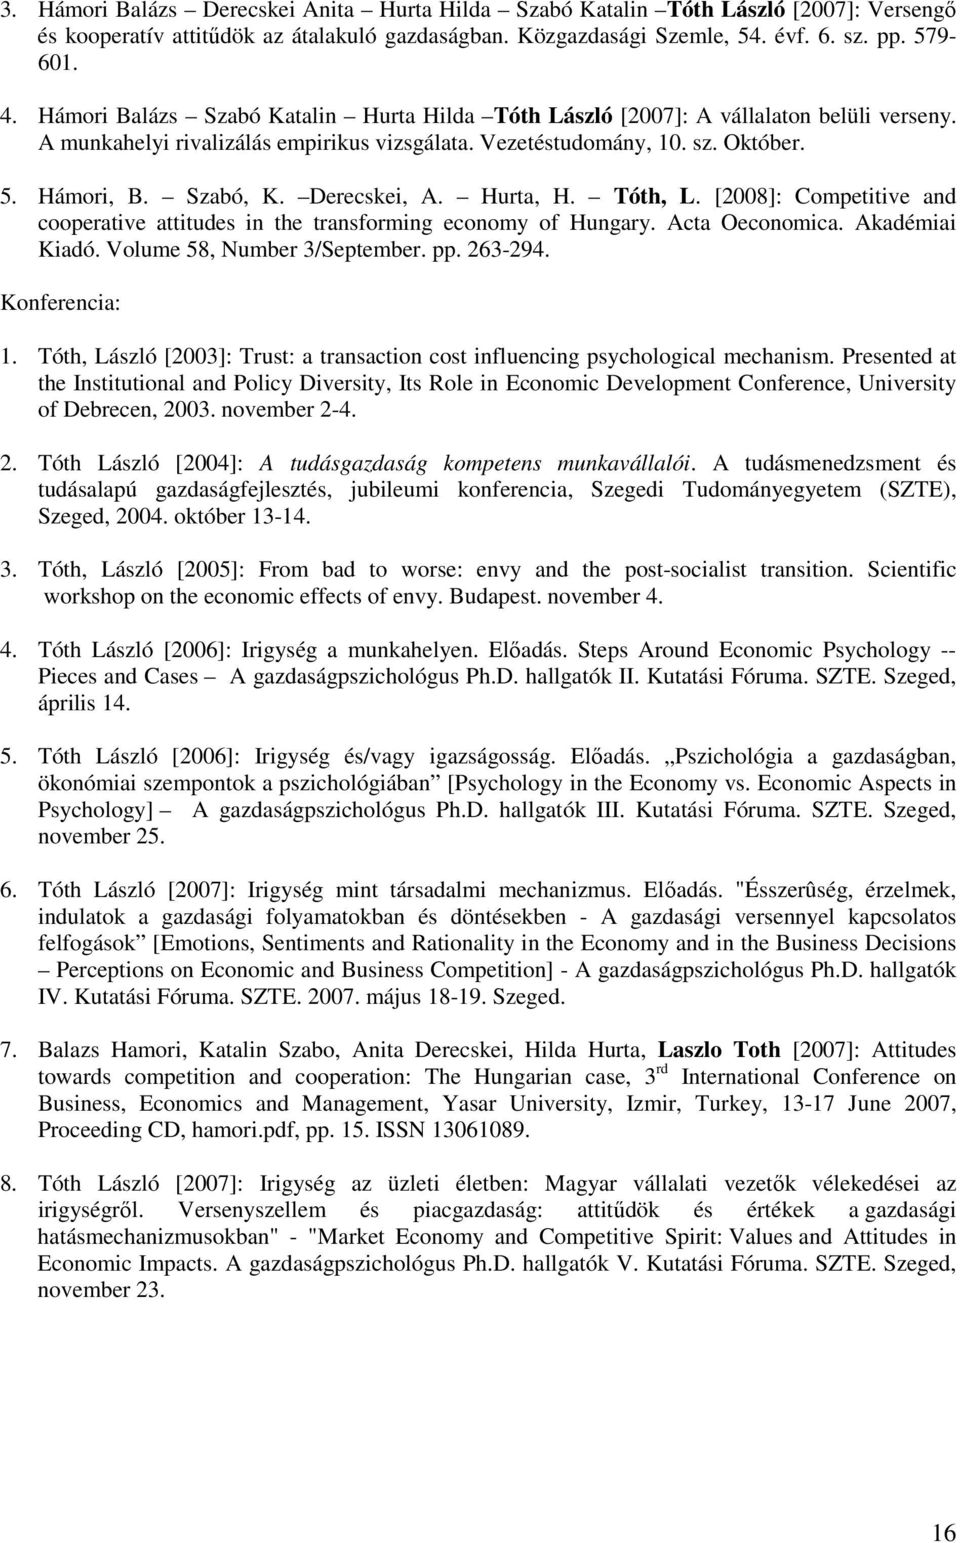 Derecskei, A. Hurta, H. Tóth, L. [2008]: Competitive and cooperative attitudes in the transforming economy of Hungary. Acta Oeconomica. Akadémiai Kiadó. Volume 58, Number 3/September. pp. 263-294.